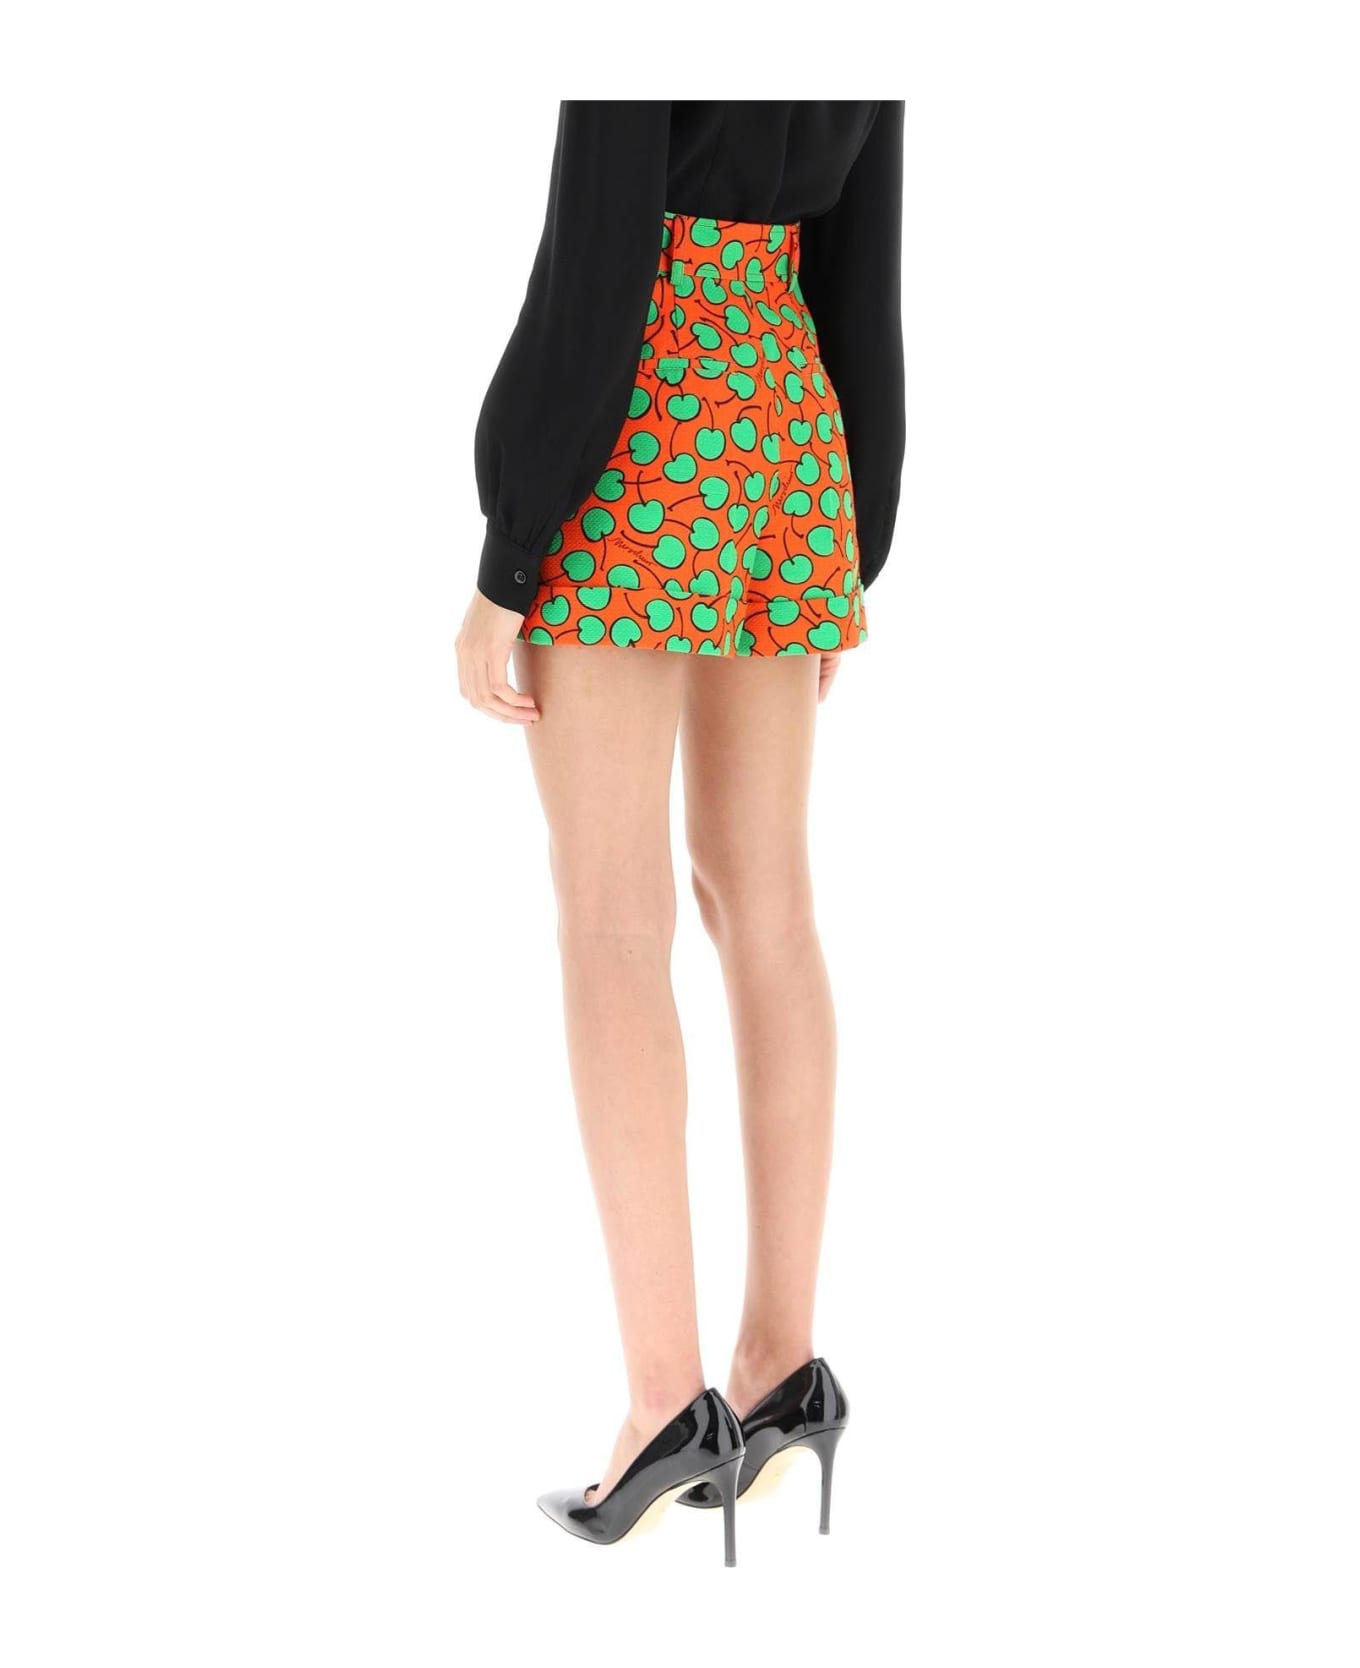 Moschino Cherry Print Piquet Shorts - ORANGE/GREEN ショートパンツ